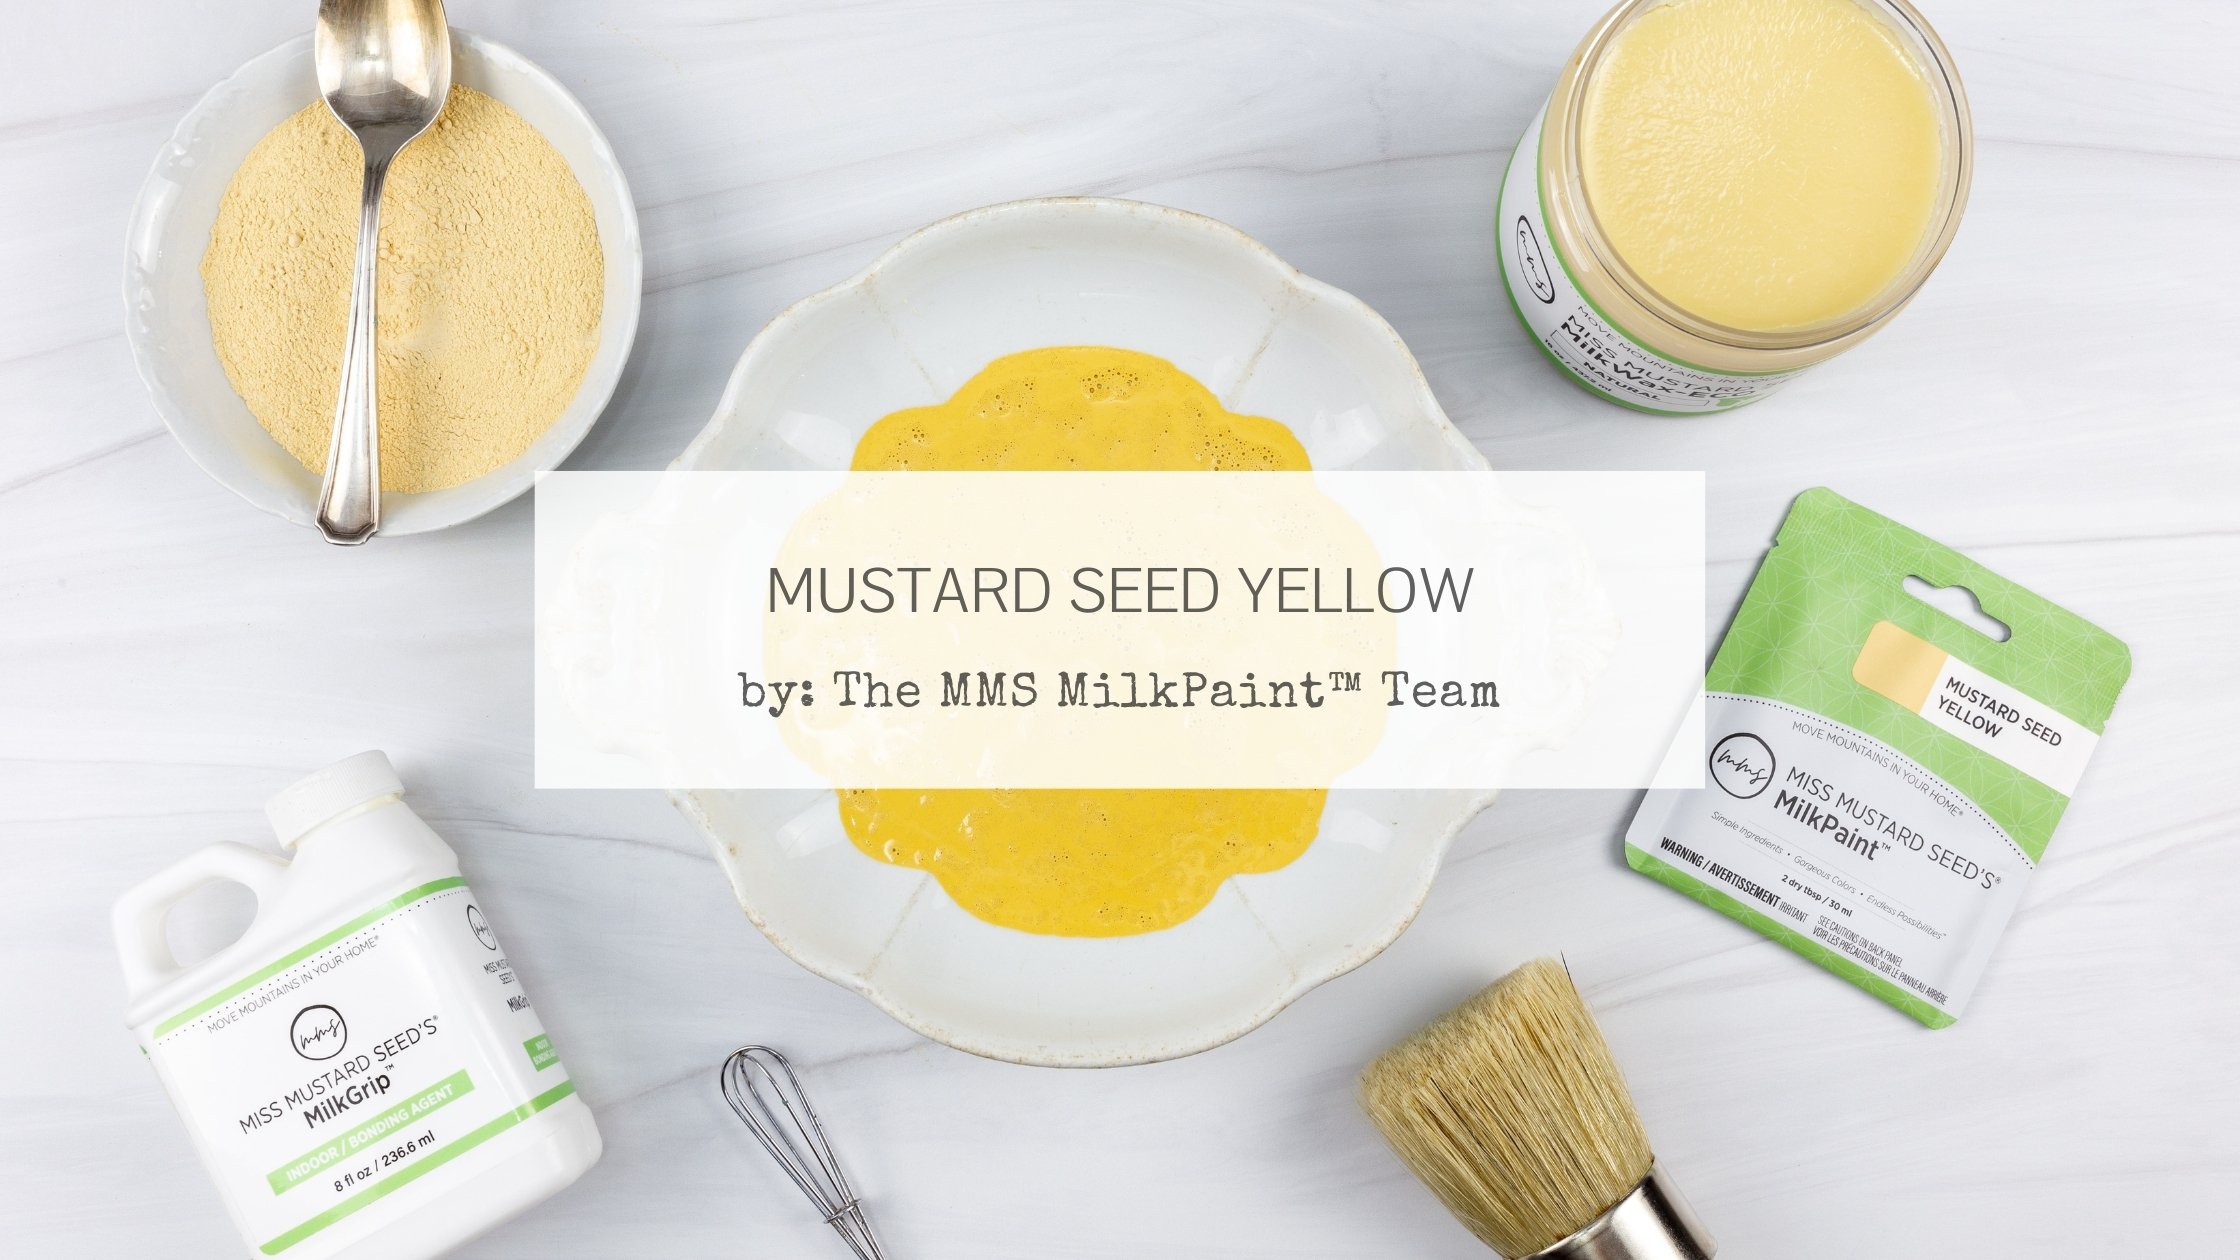 DIY Papier-Mâché Vase With Miss Mustard Seed's® MilkPaint™ — Miss Mustard  Seed's Milk Paint